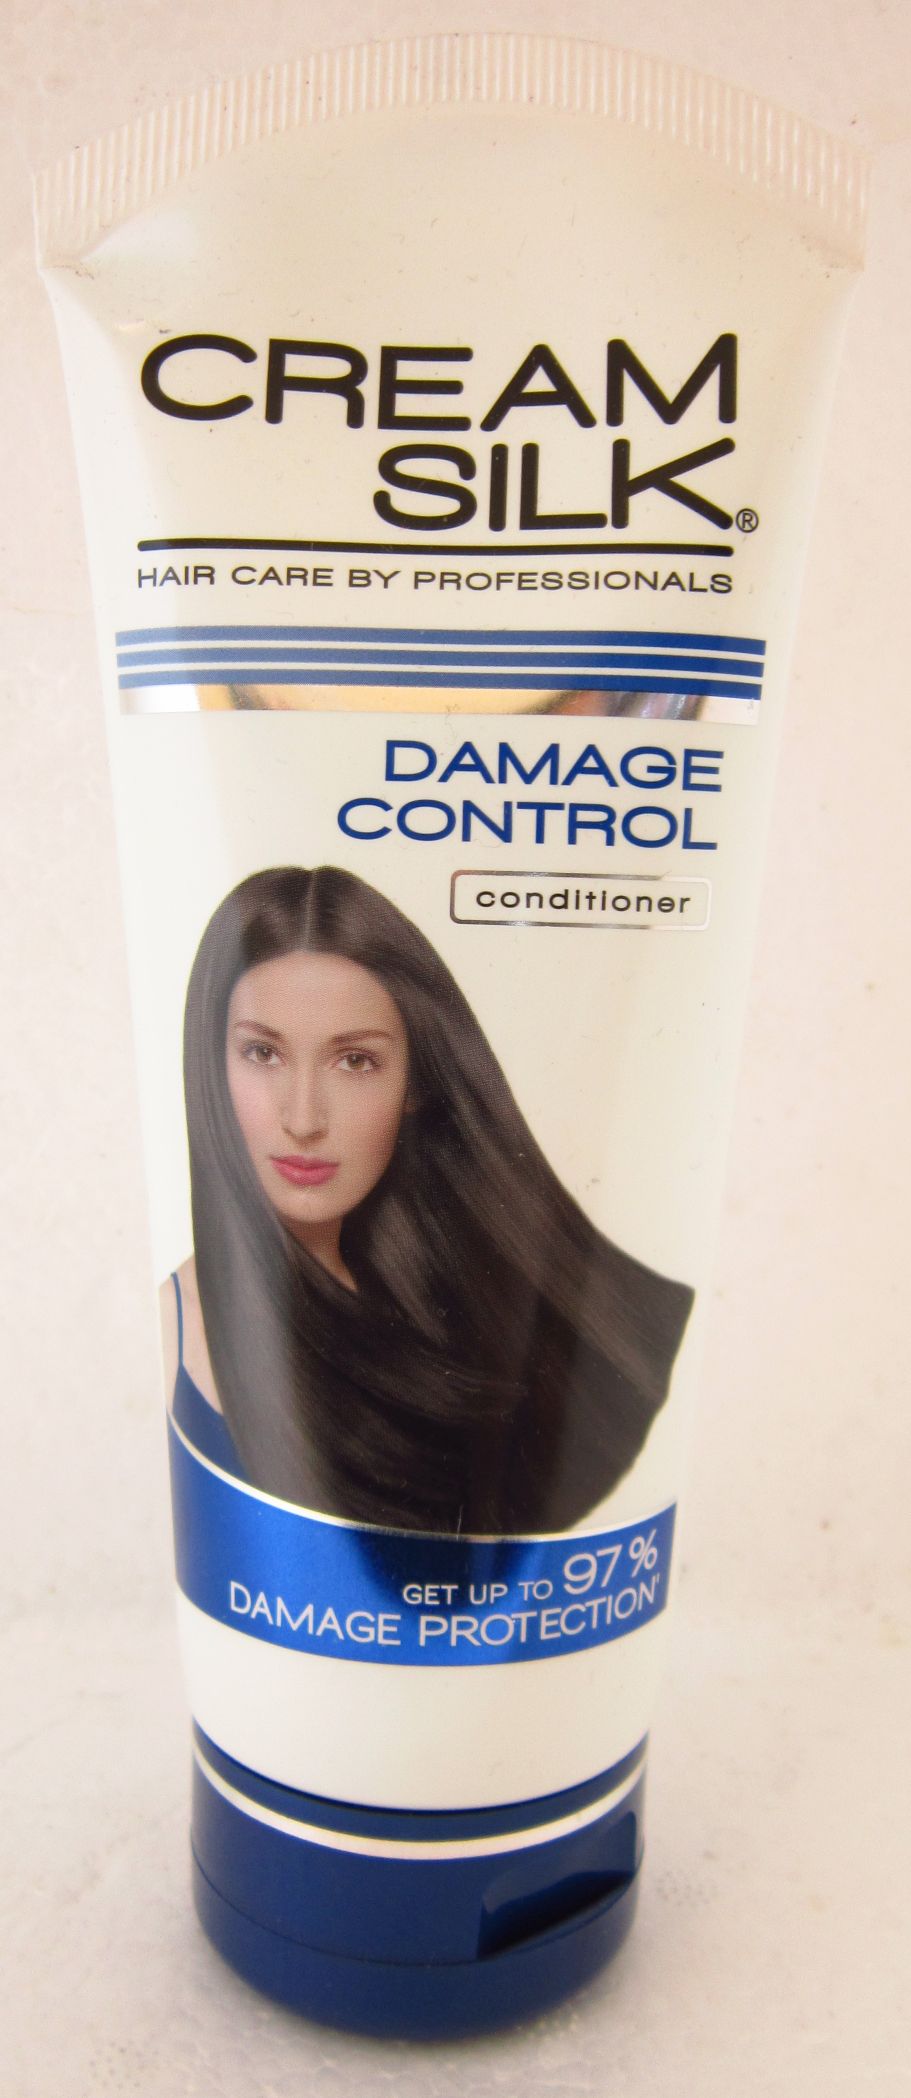 Cream Silk Damage Control Conditioner Image